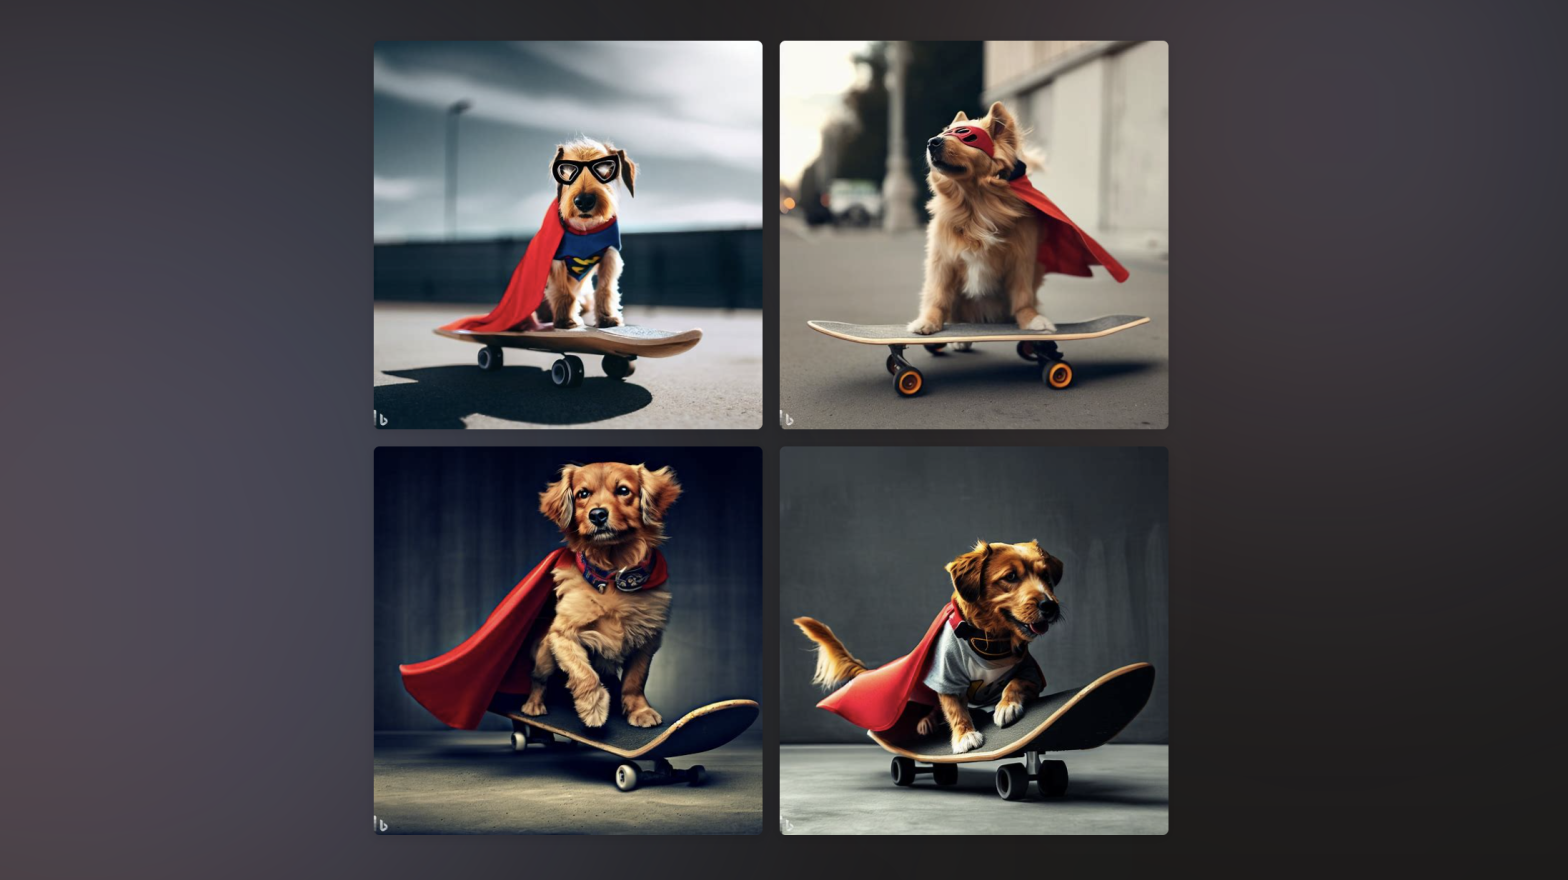 Superhero dogs on skateboards. (Screenshot: Jake Peterson)